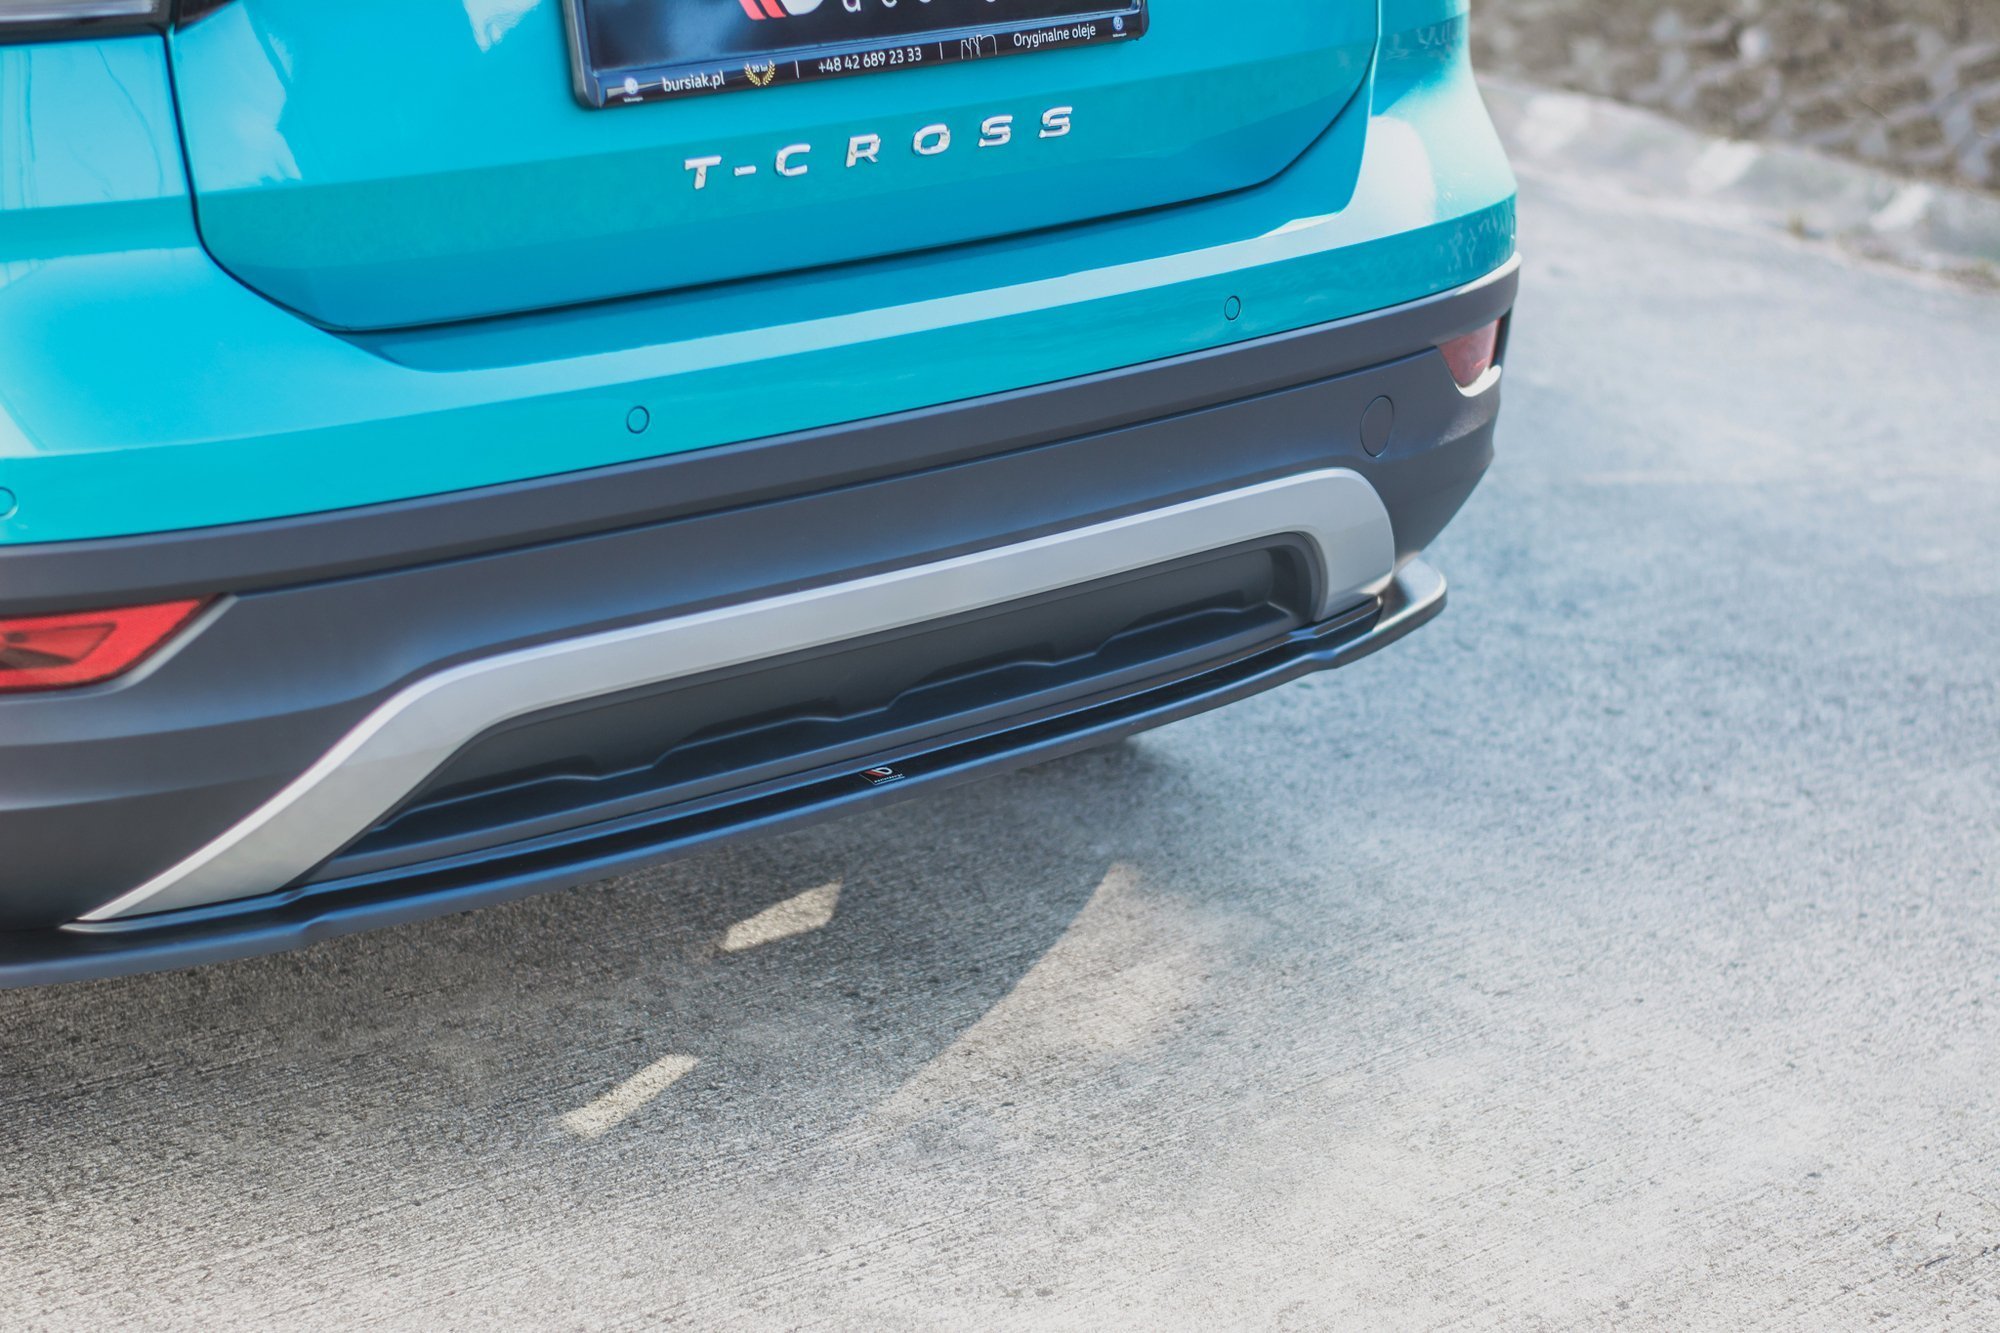 Splitter Tylny Środkowy Volkswagen TCross Nasza Oferta